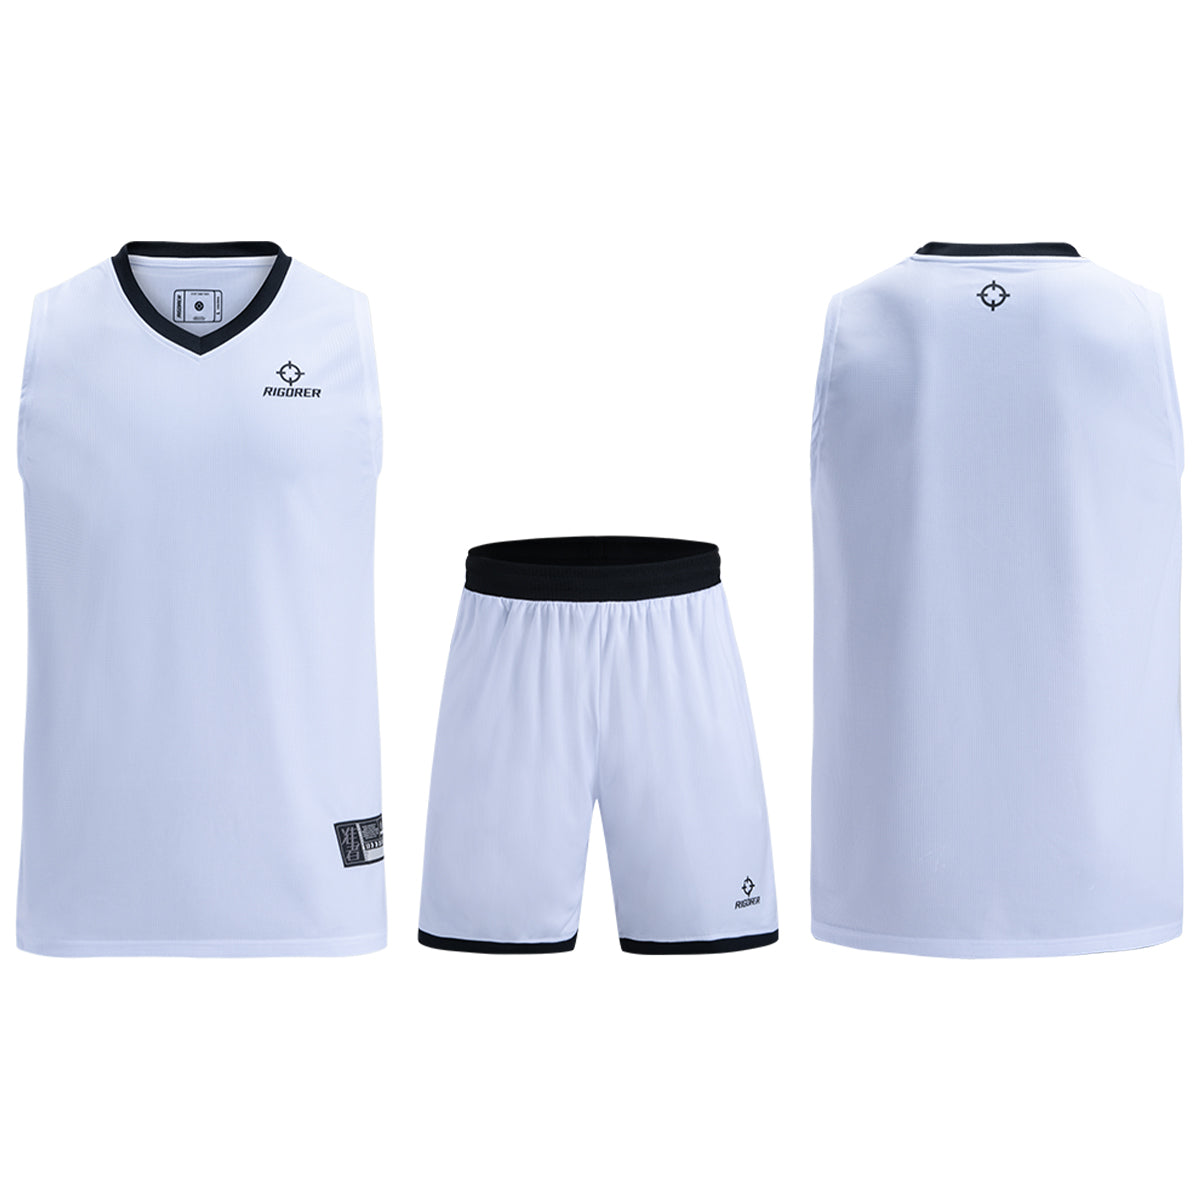 New China National Basketball Jersey Nike XL Limited White Home Team China